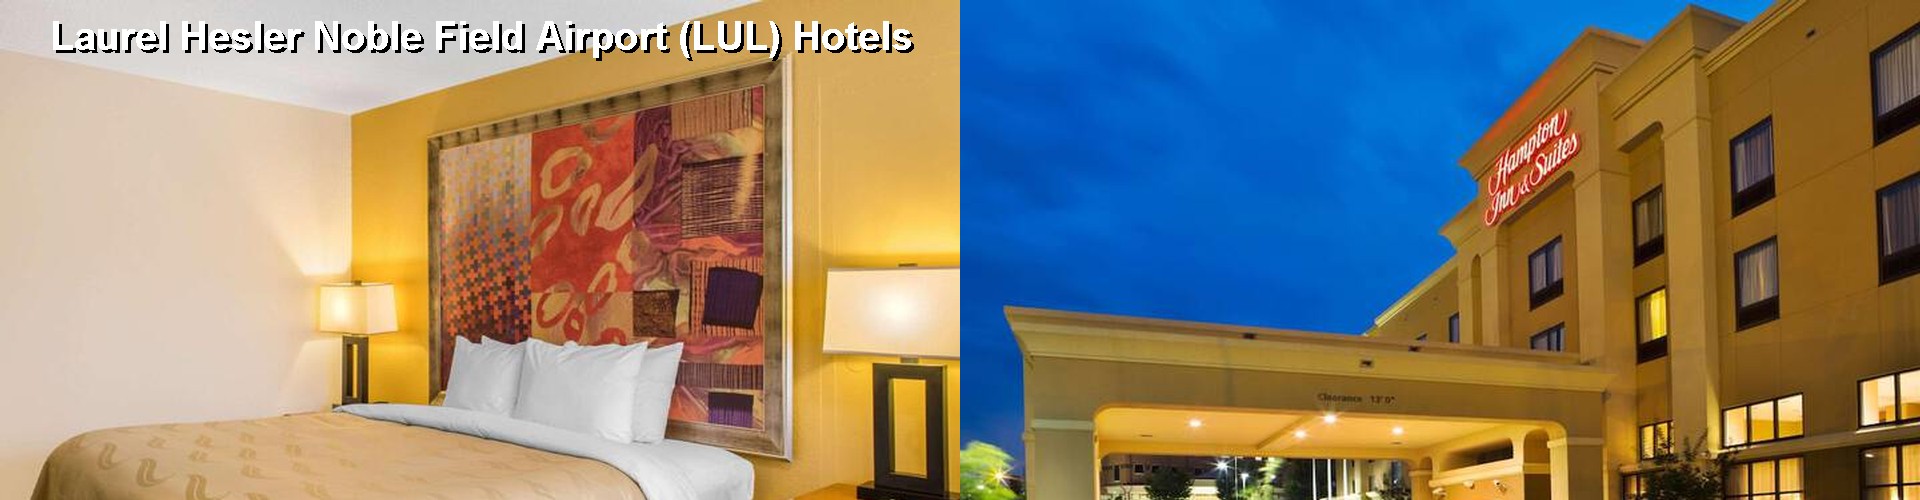 4 Best Hotels near Laurel Hesler Noble Field Airport (LUL)